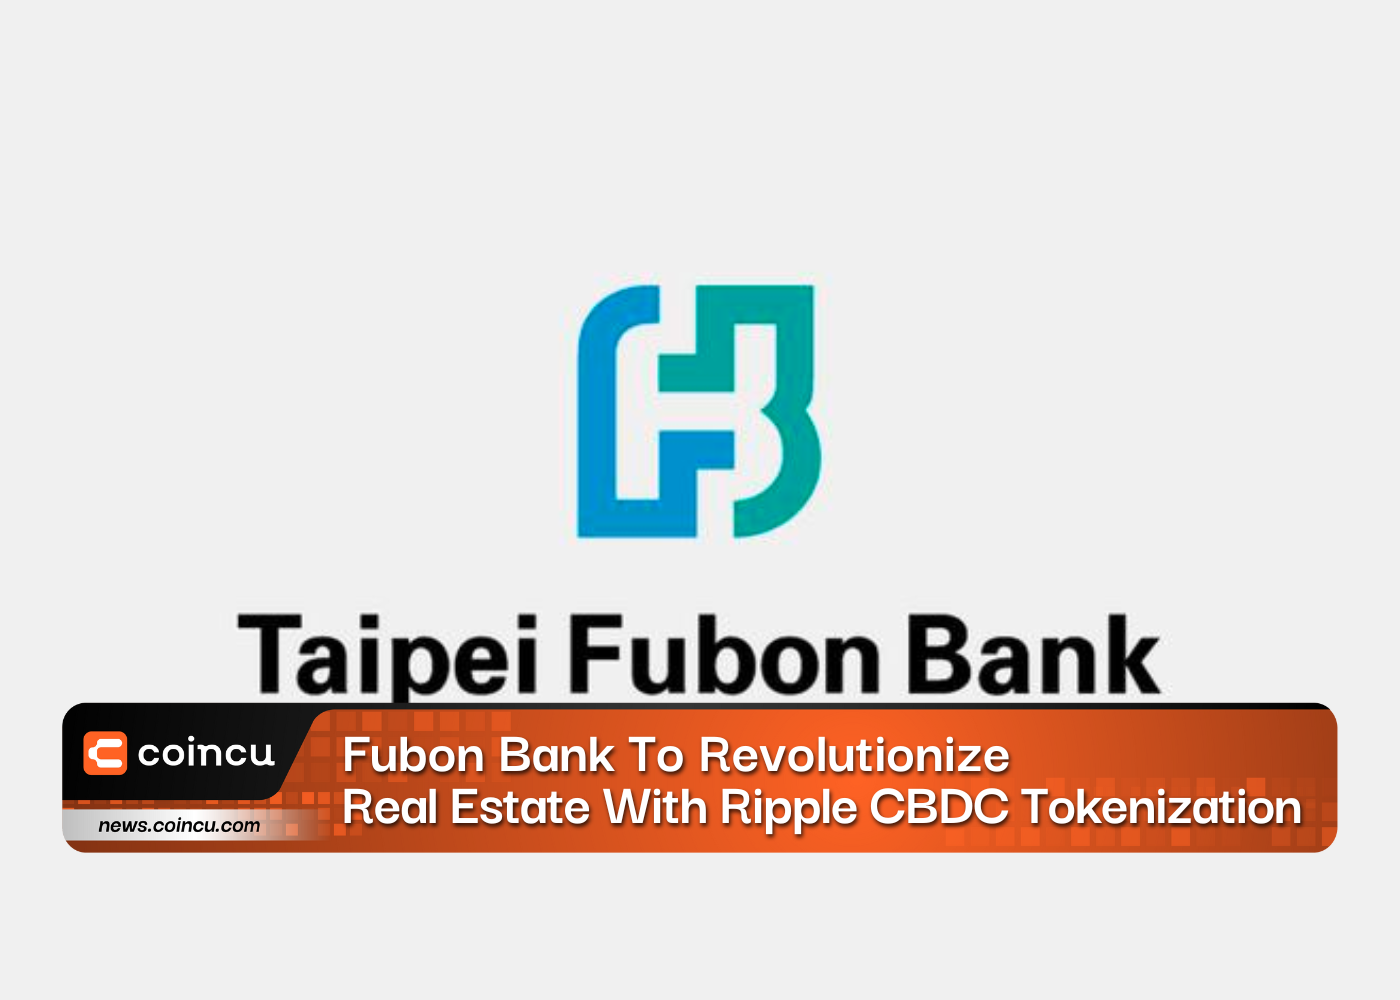 Fubon Bank To Revolutionize